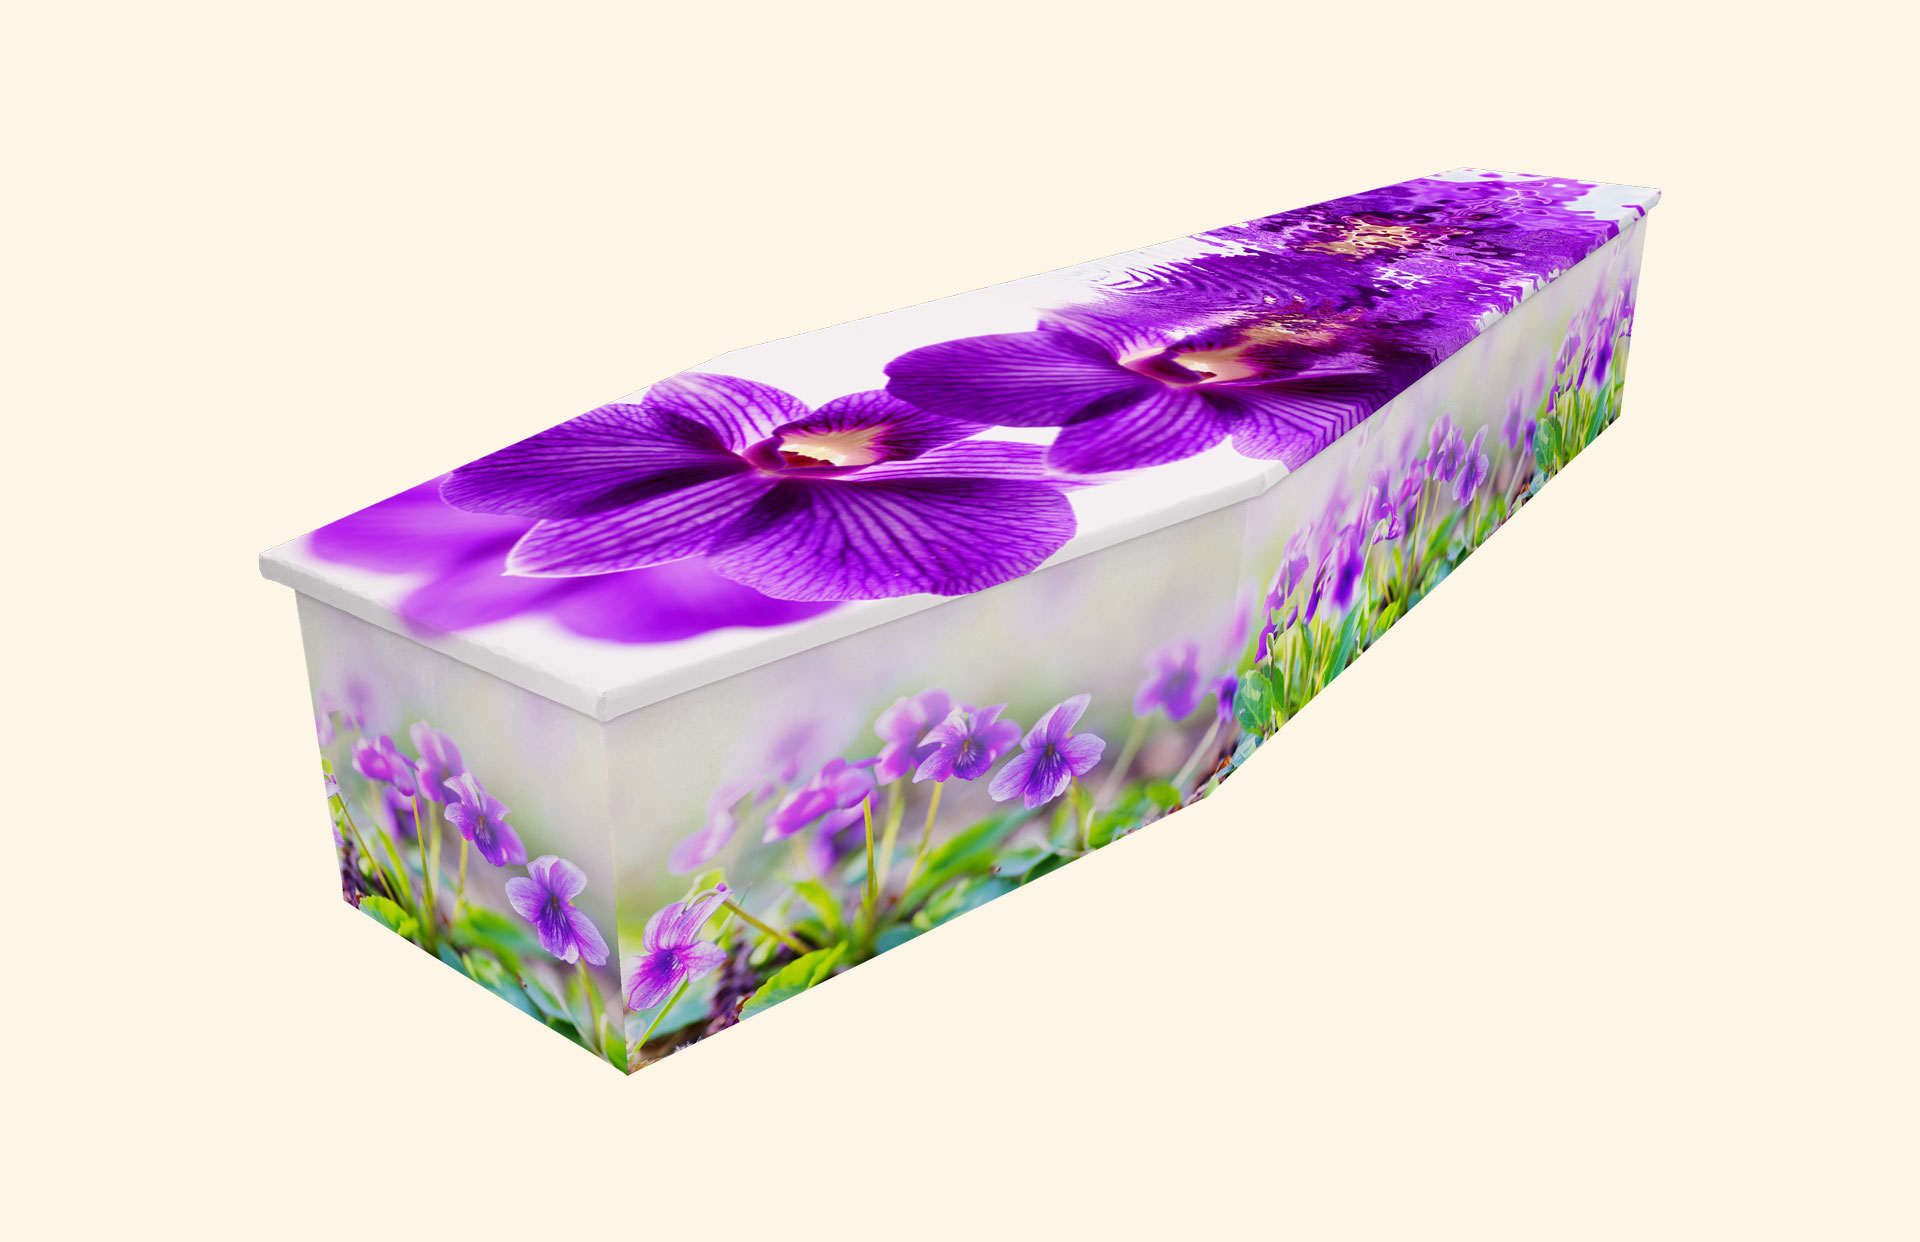 Dream in Purple design on a cardboard coffin